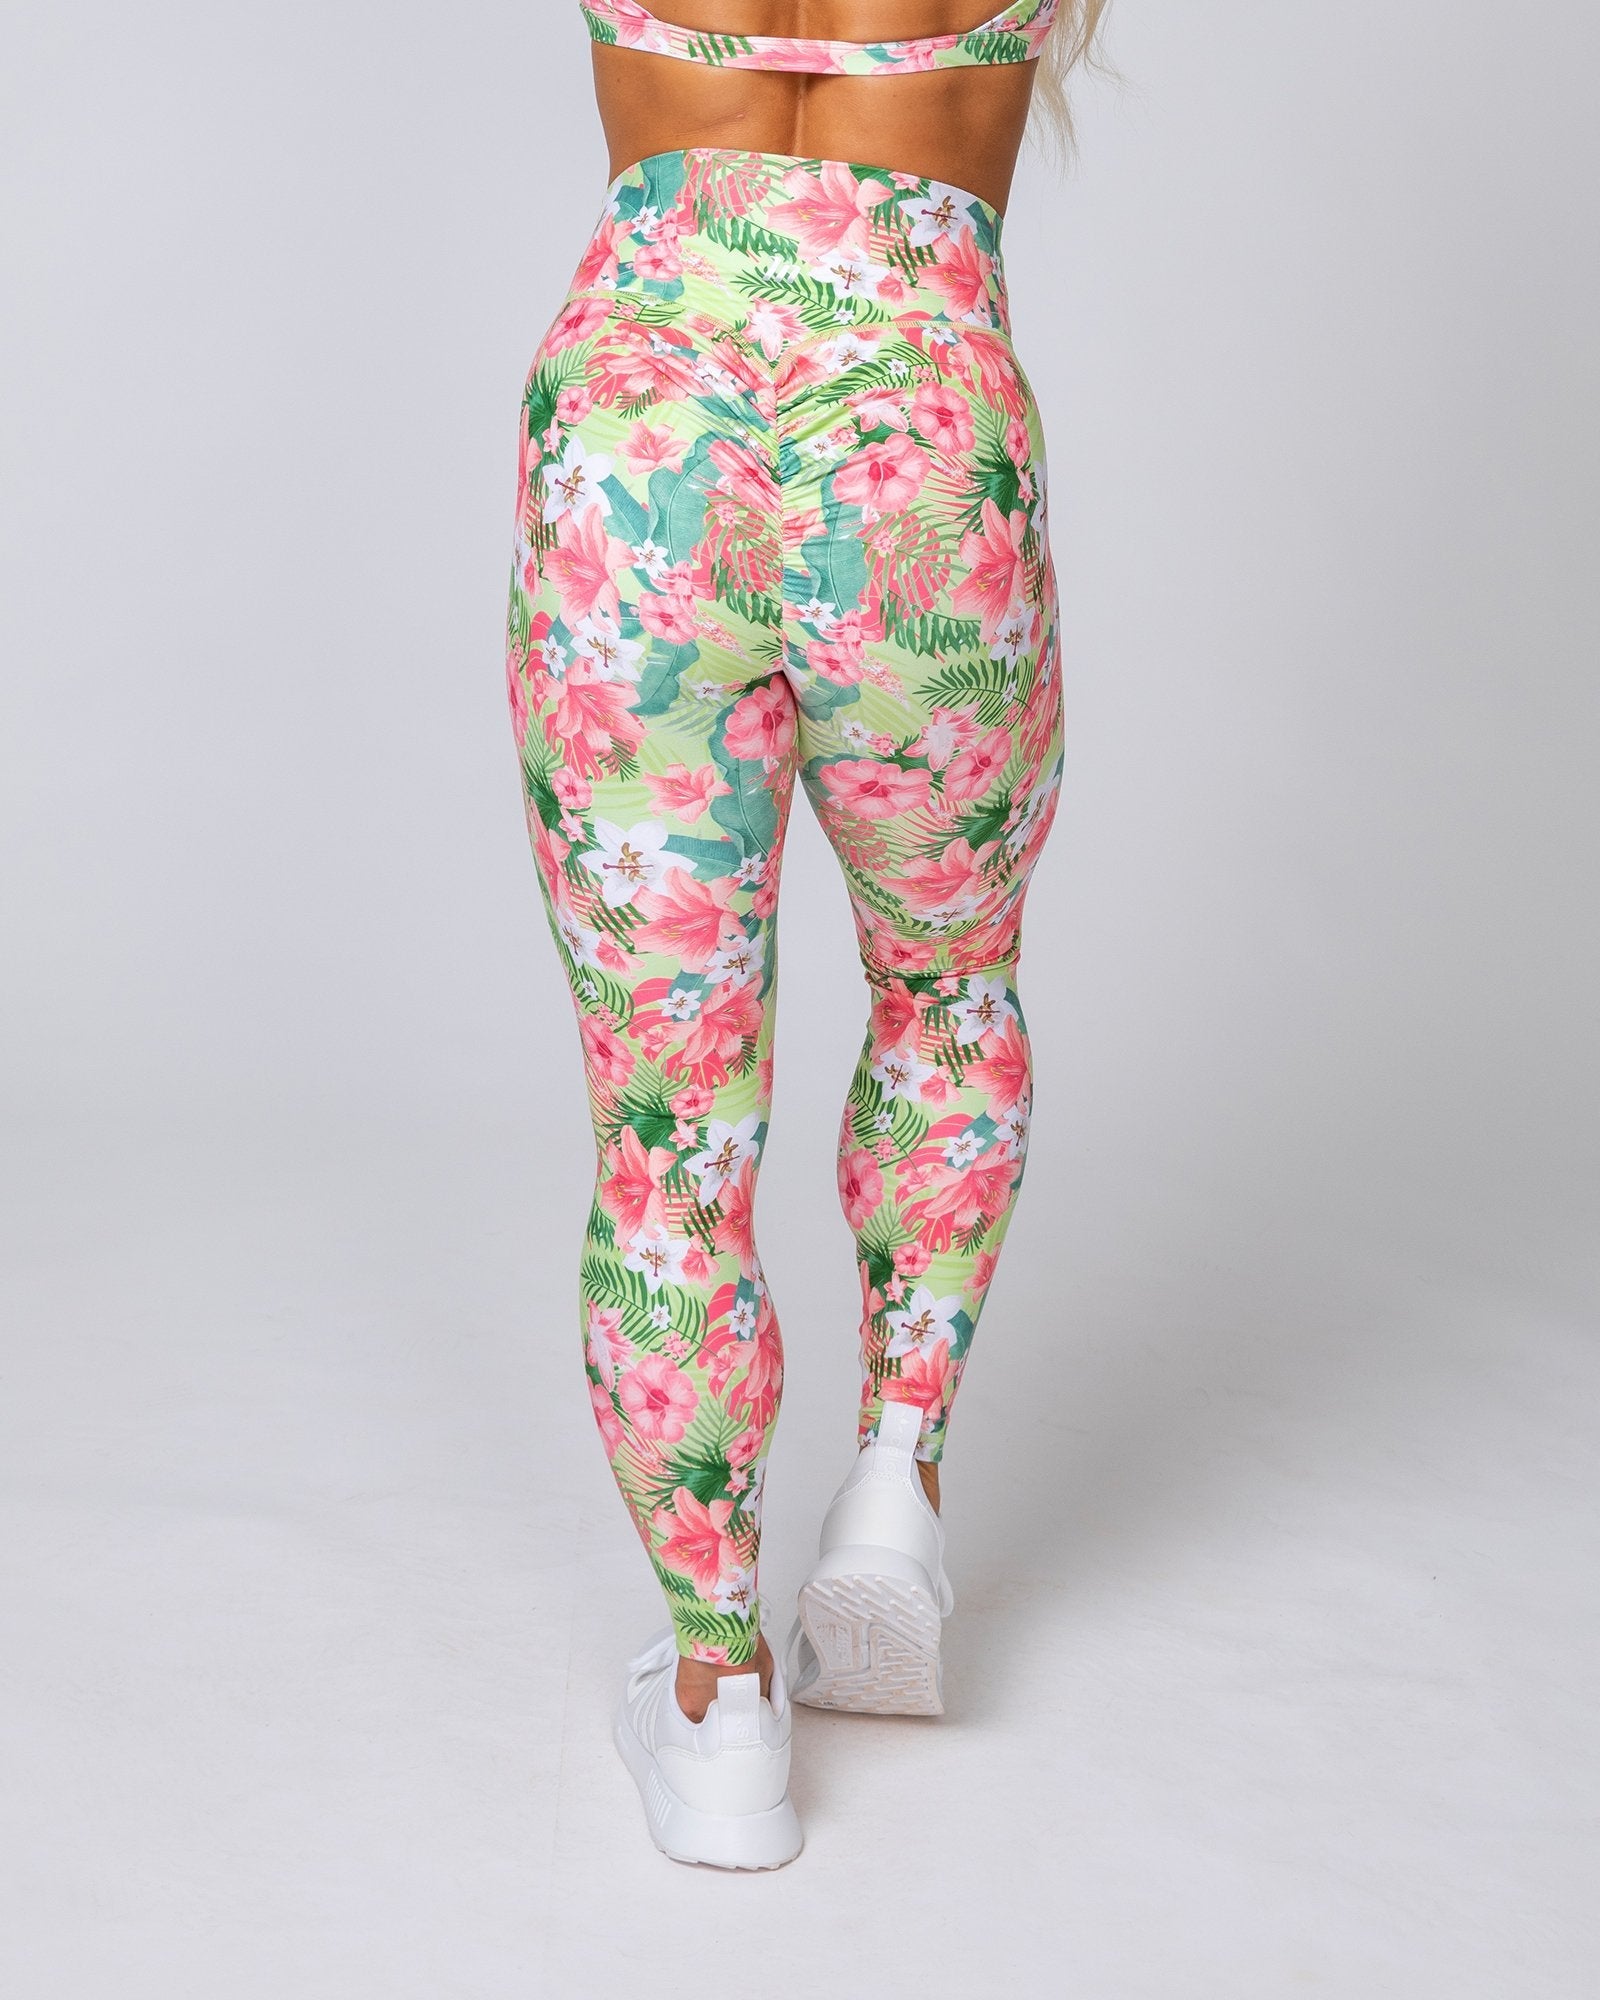 Groovy Flowers Yoga Leggings Women, 70s Retro Floral High Waisted Pant |  Womens yoga leggings, Designer tights, Yoga leggings